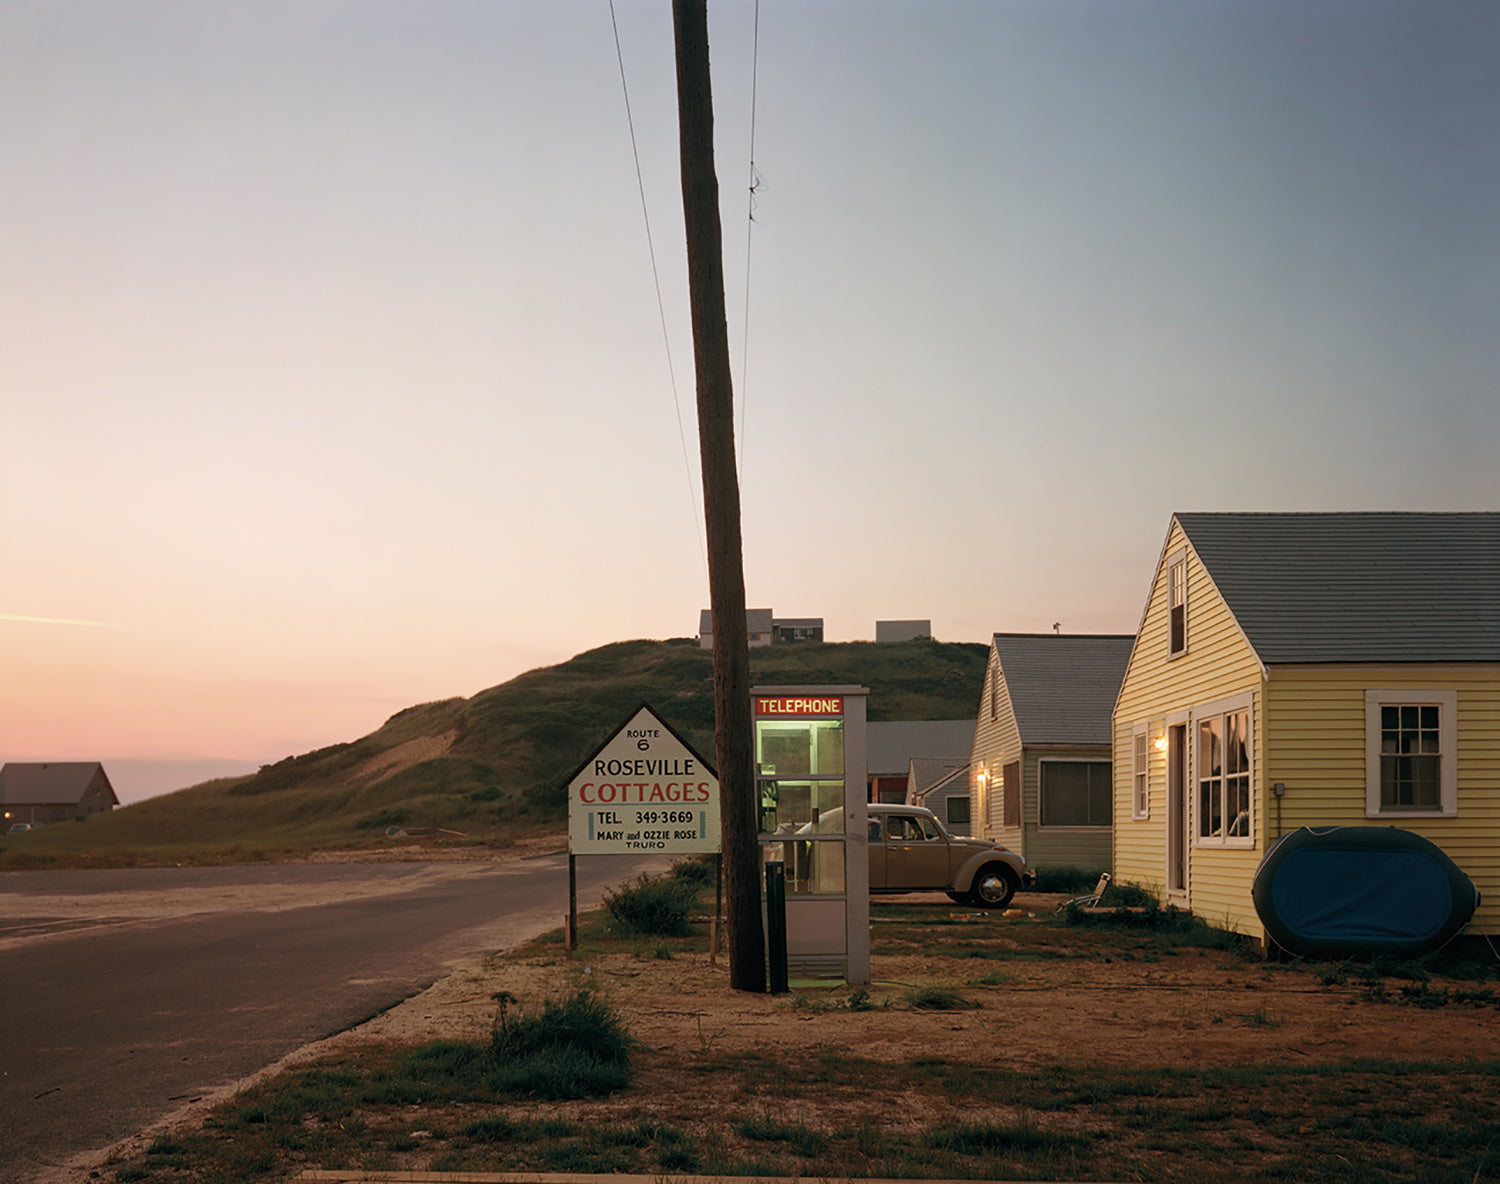 Joel Meyerowitz — Cape Light